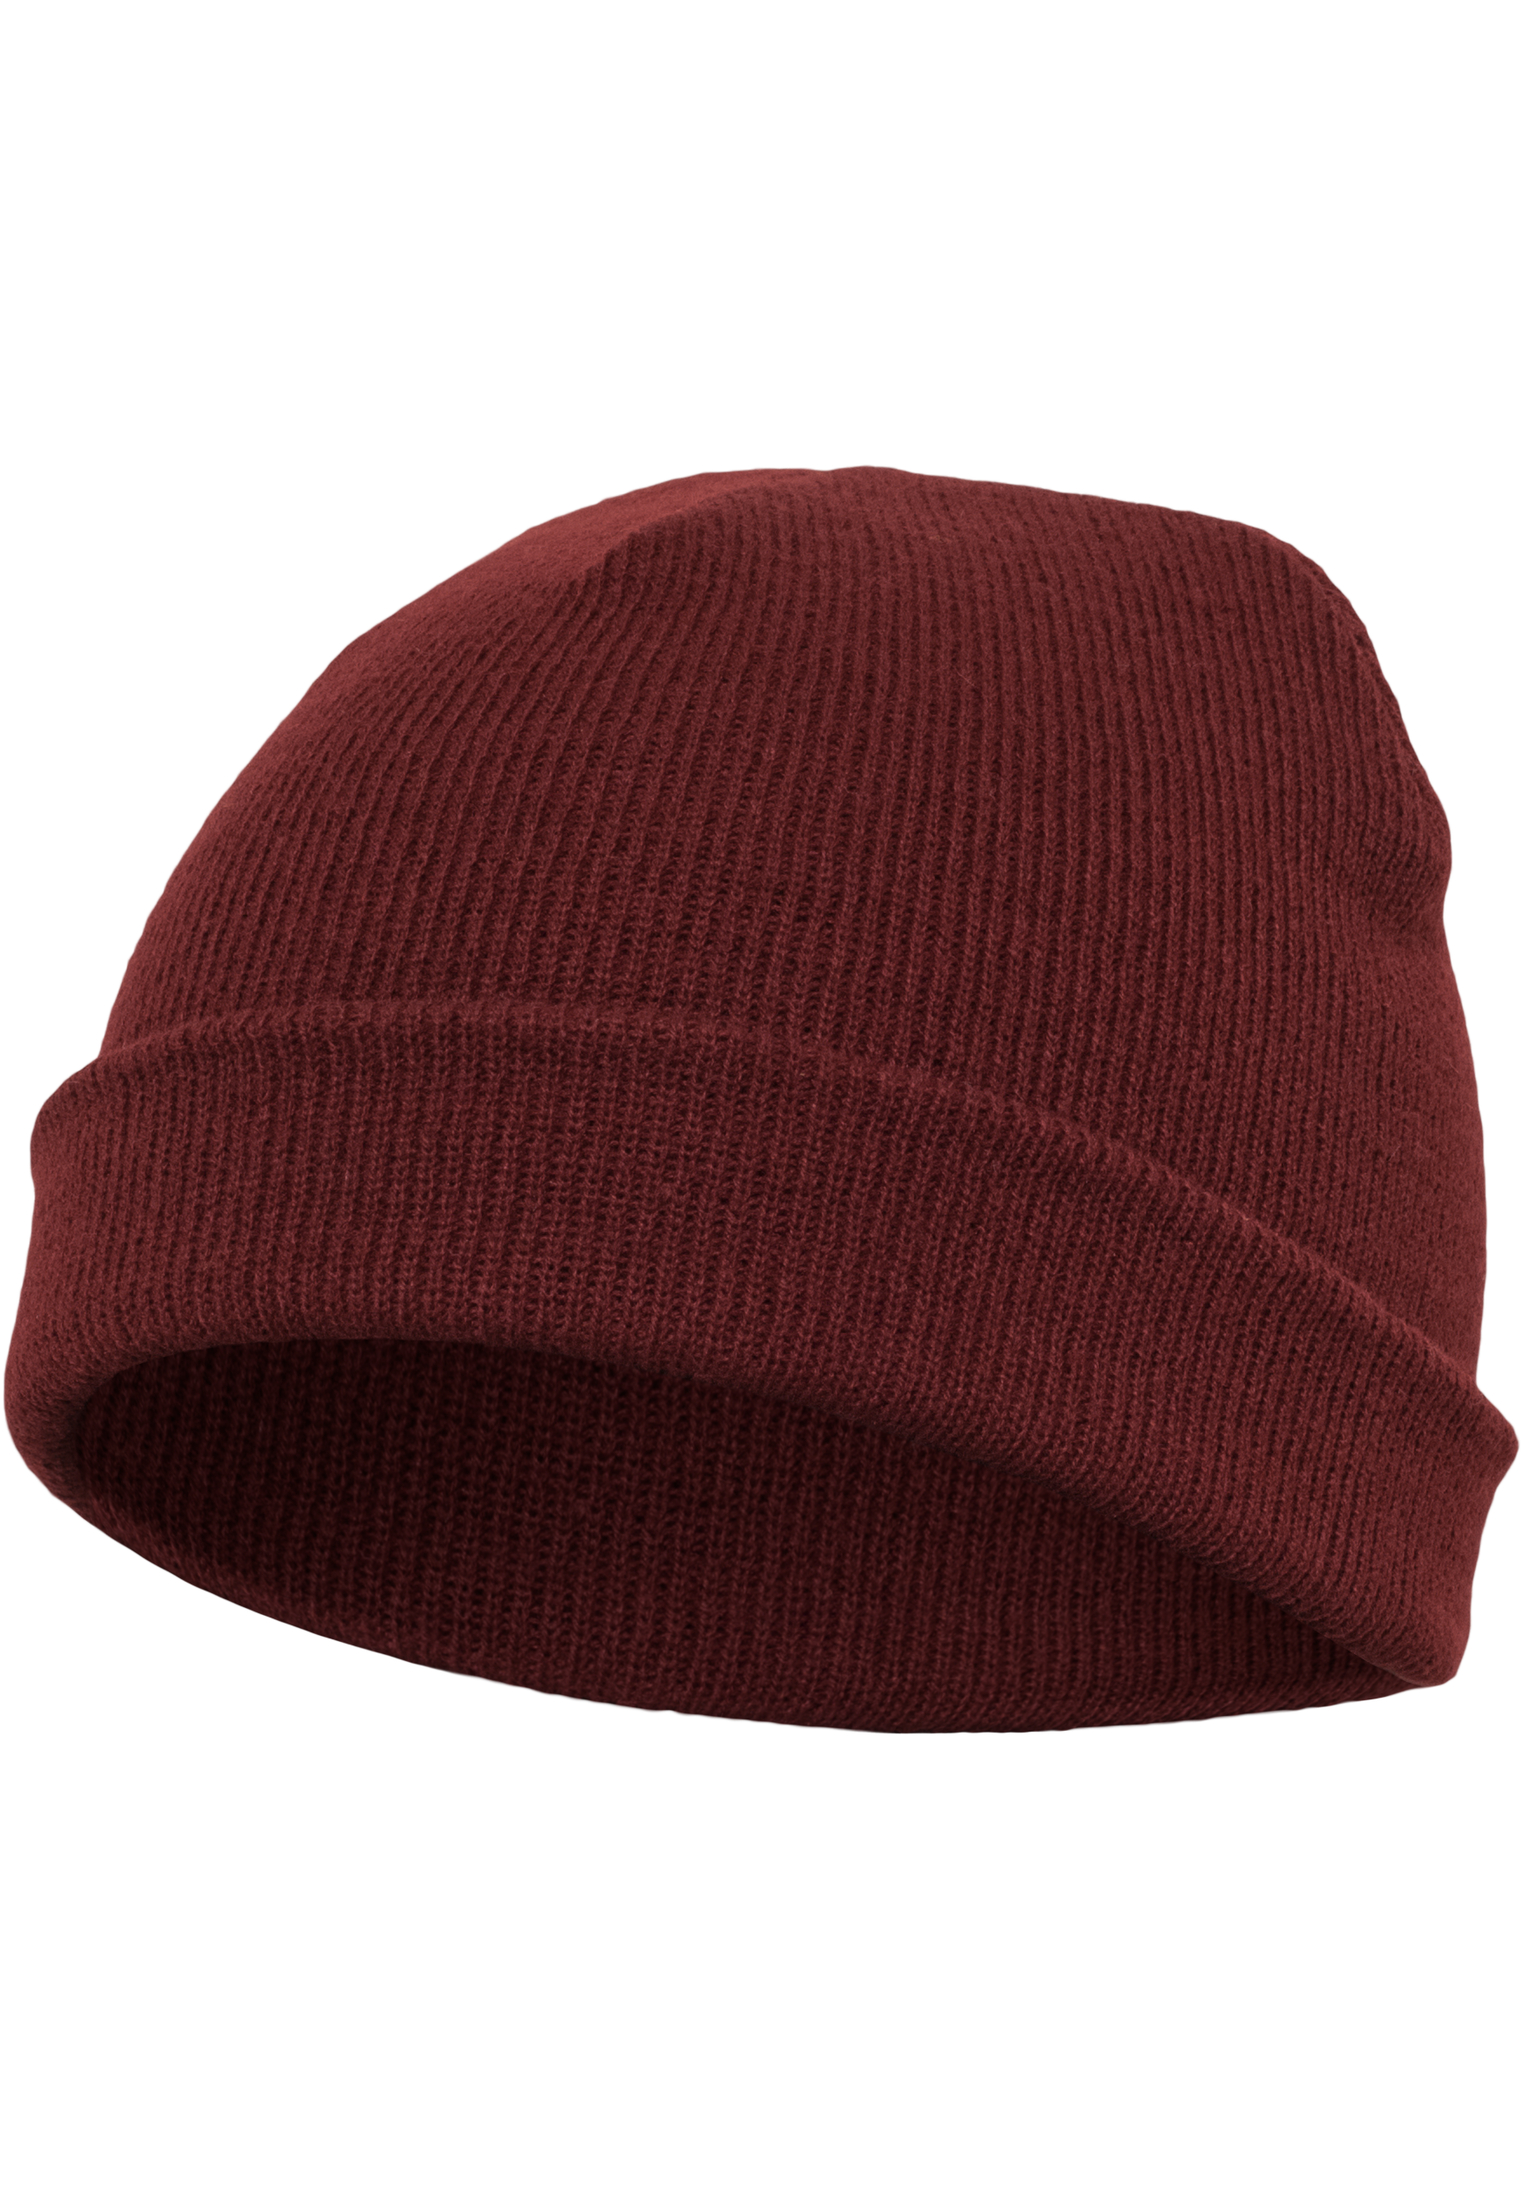 FLEXFIT cap - red